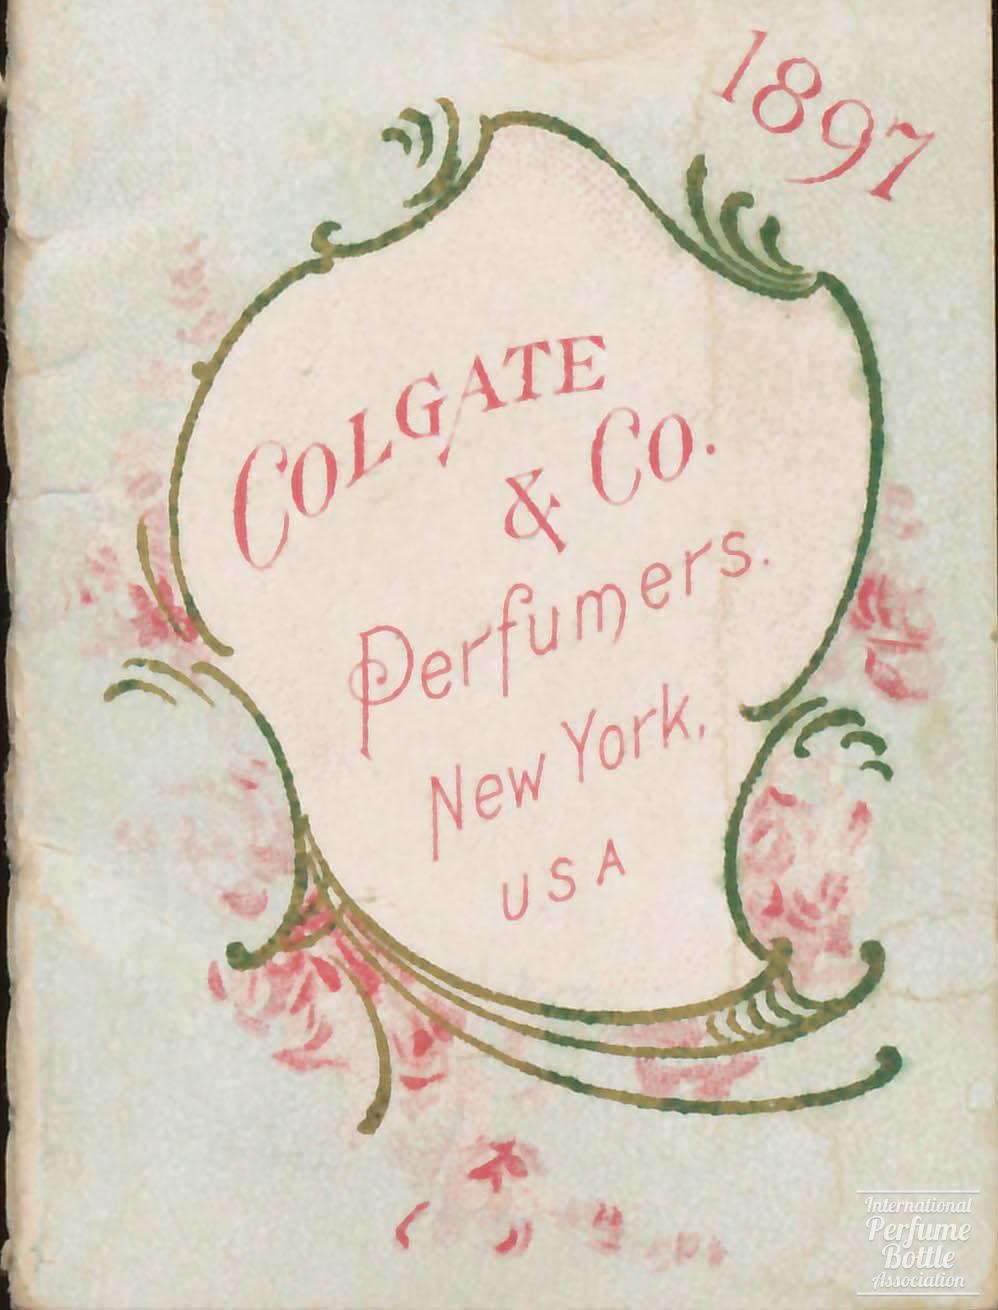 1897 Advertising Calendar by Colgate & Co.  (Little Girl Theme)